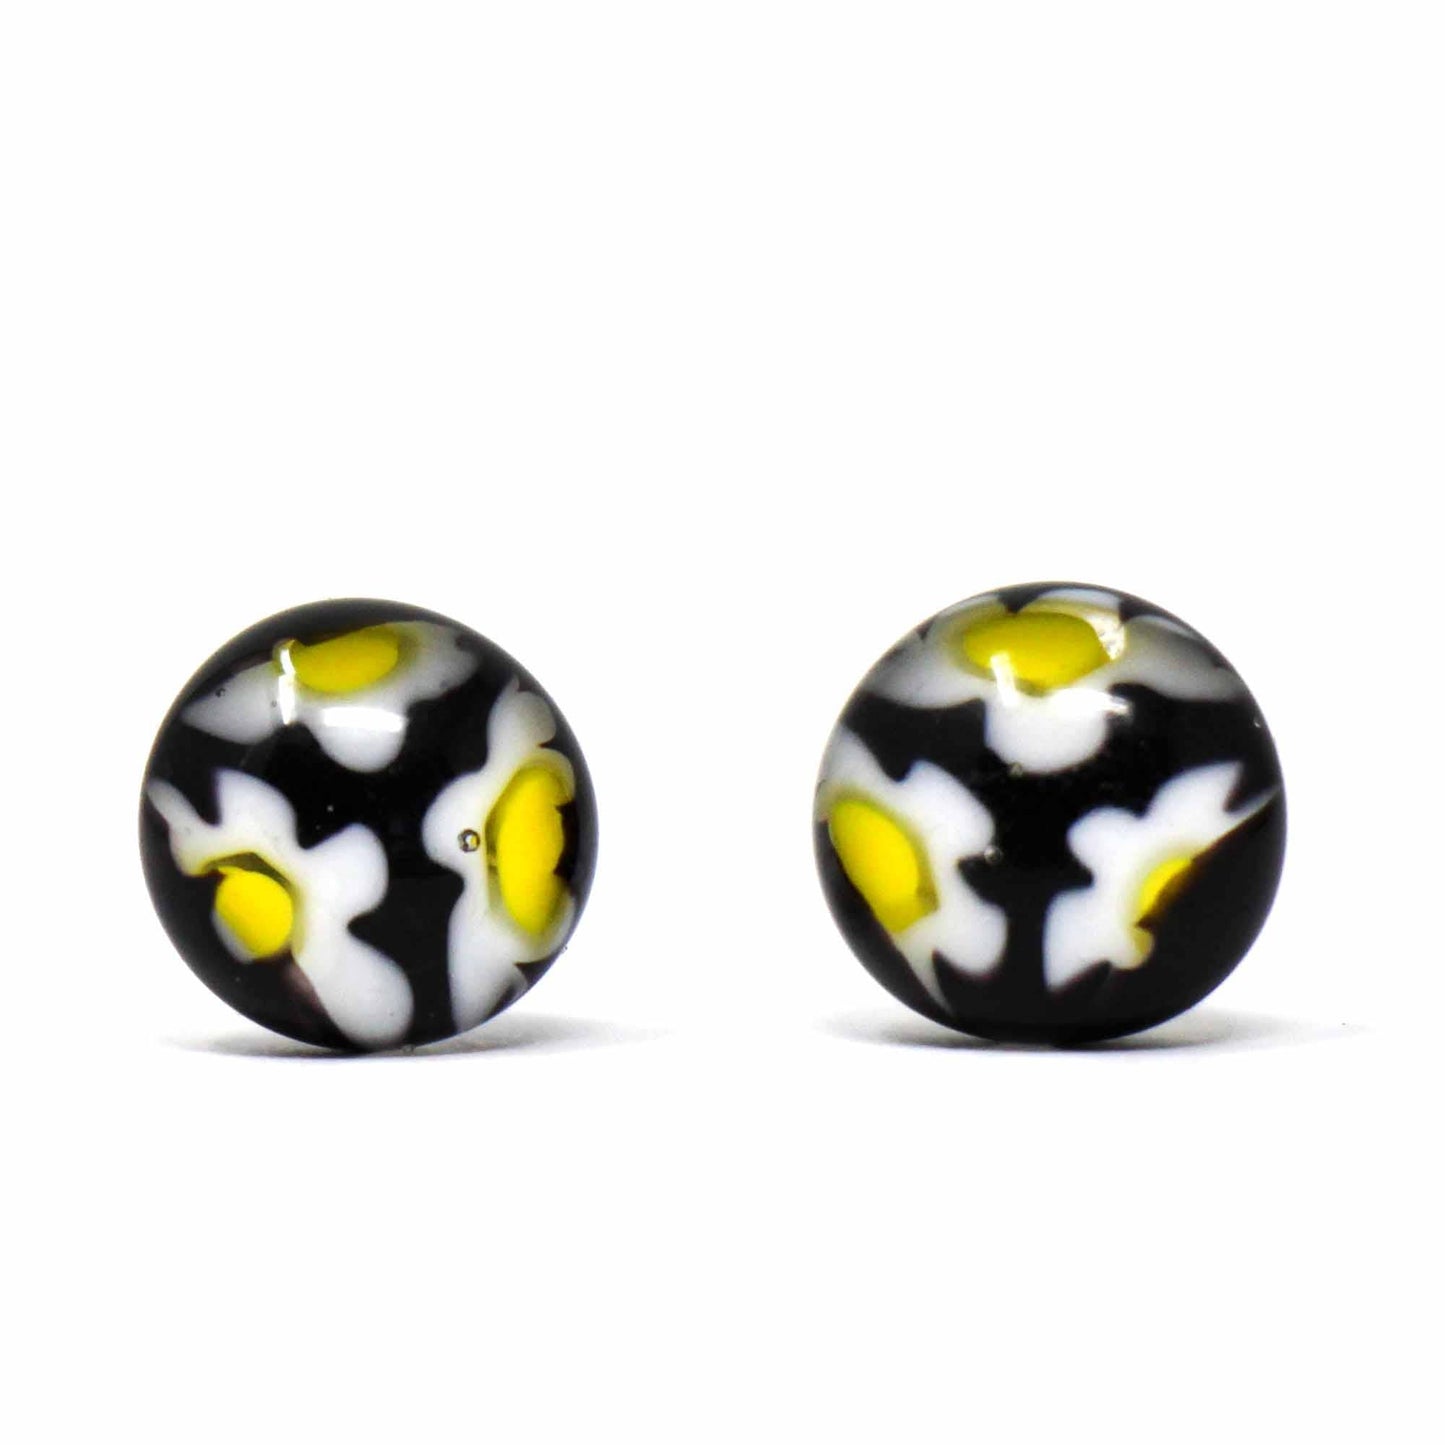 Round Glass Stud Earrings, Black/White Flowers - SINGLE m/3